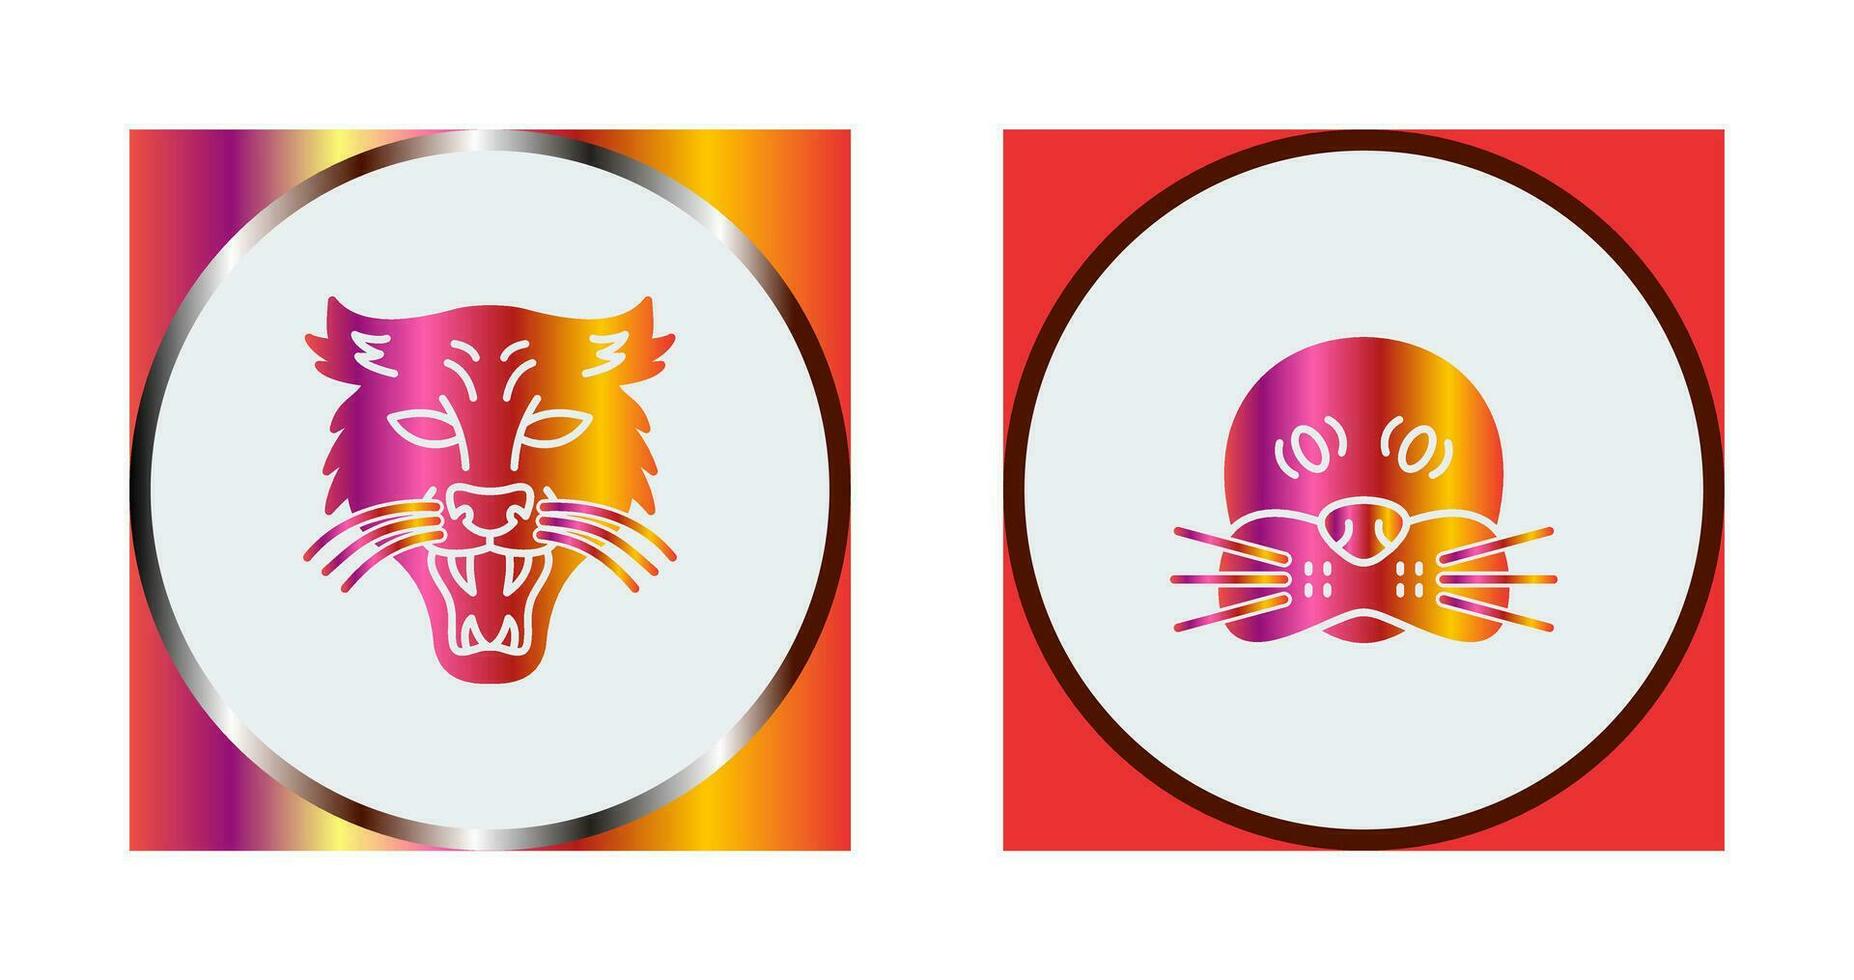 Puma and seal Icon vector